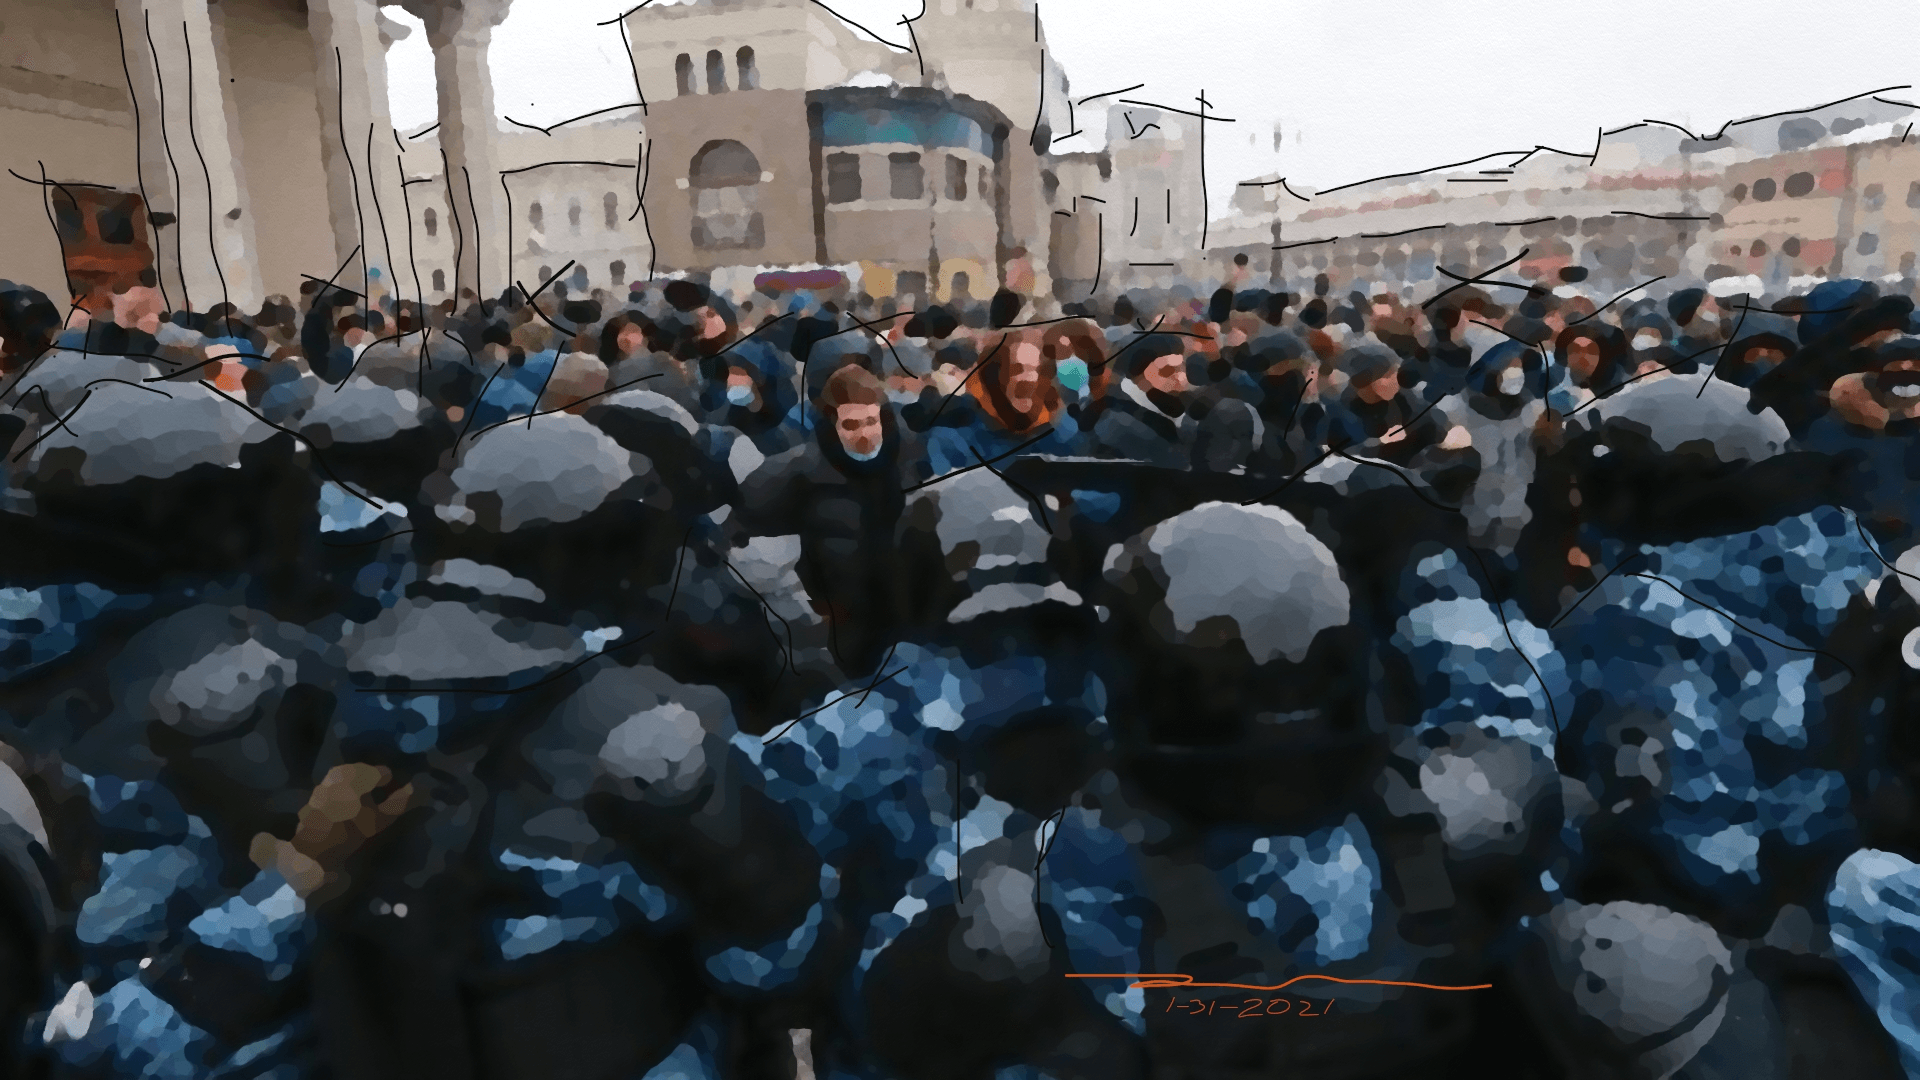 Navalny Moscow Protest 1-31-2021 by Romero 